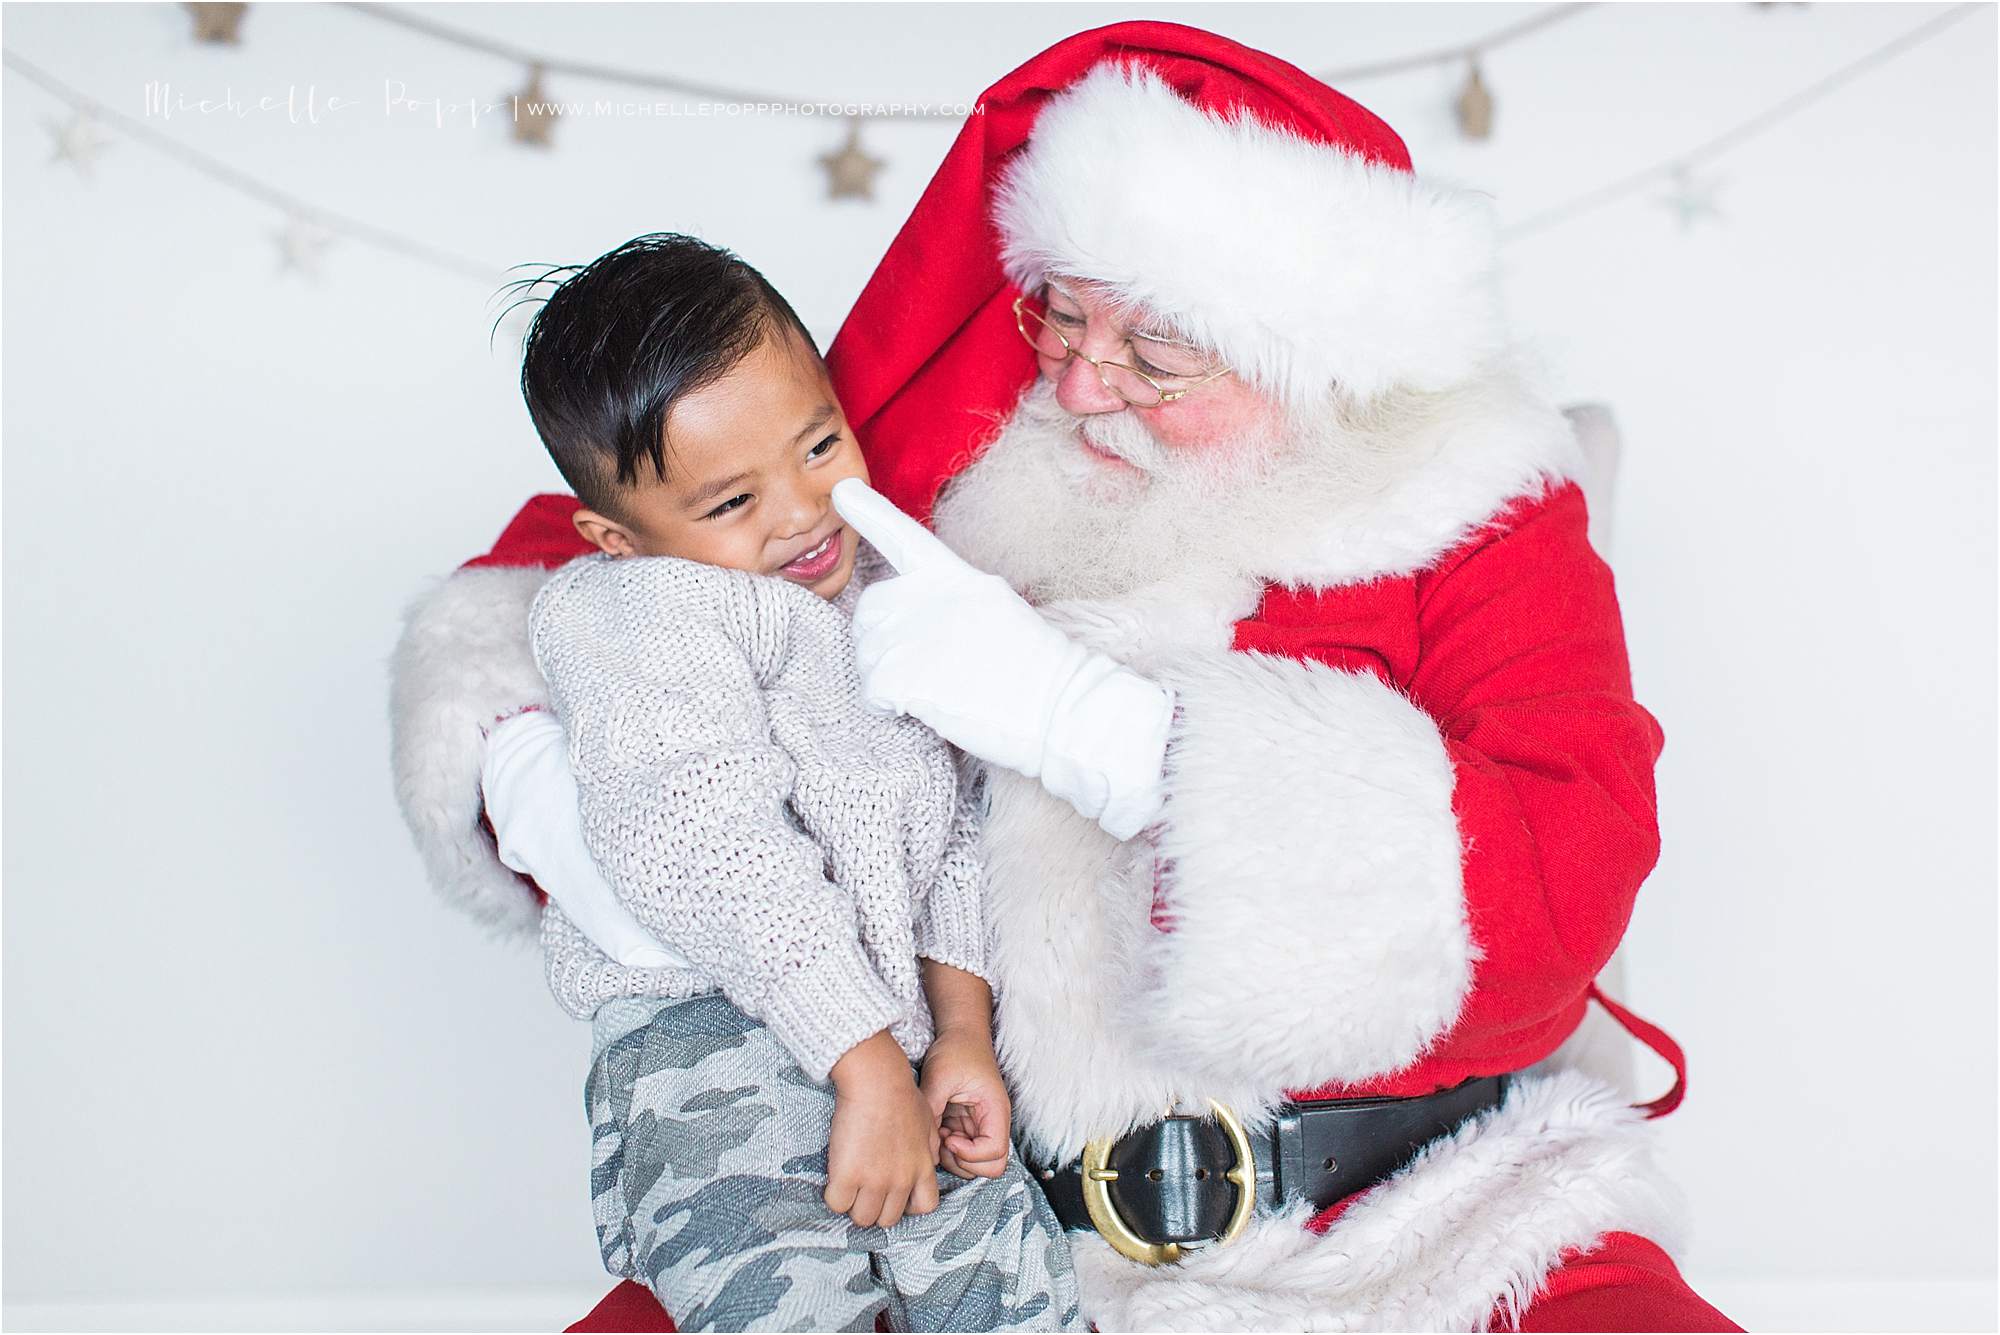 Santa touching little boy's nose